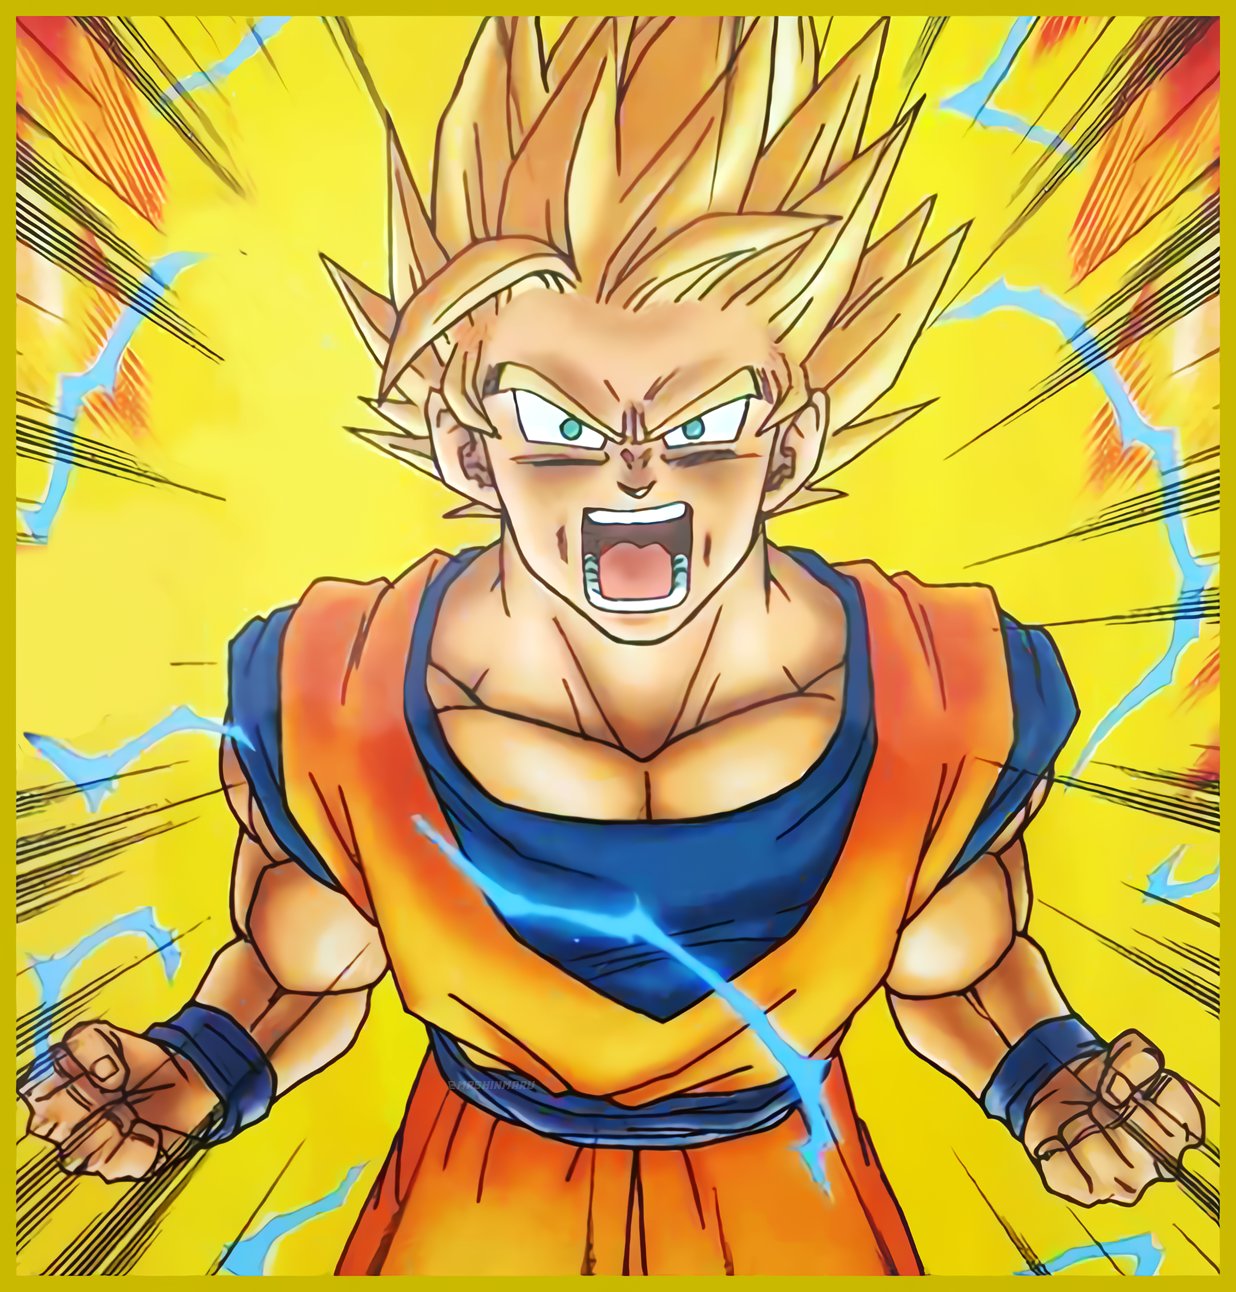 Saiyanbeast on X: Dragon Ball Retro 2004/2005 Artwork Super Saiyan 2 Son- Goku ~ Katsuyoshi Nakatsuru #DragonBallZ #ドラゴンボールZ #DBZ #DragonBallDaima  #Retro #Shueisha #Toeianimation #vintage #2000s #MajinBuuSaga #Toriyama # Goku